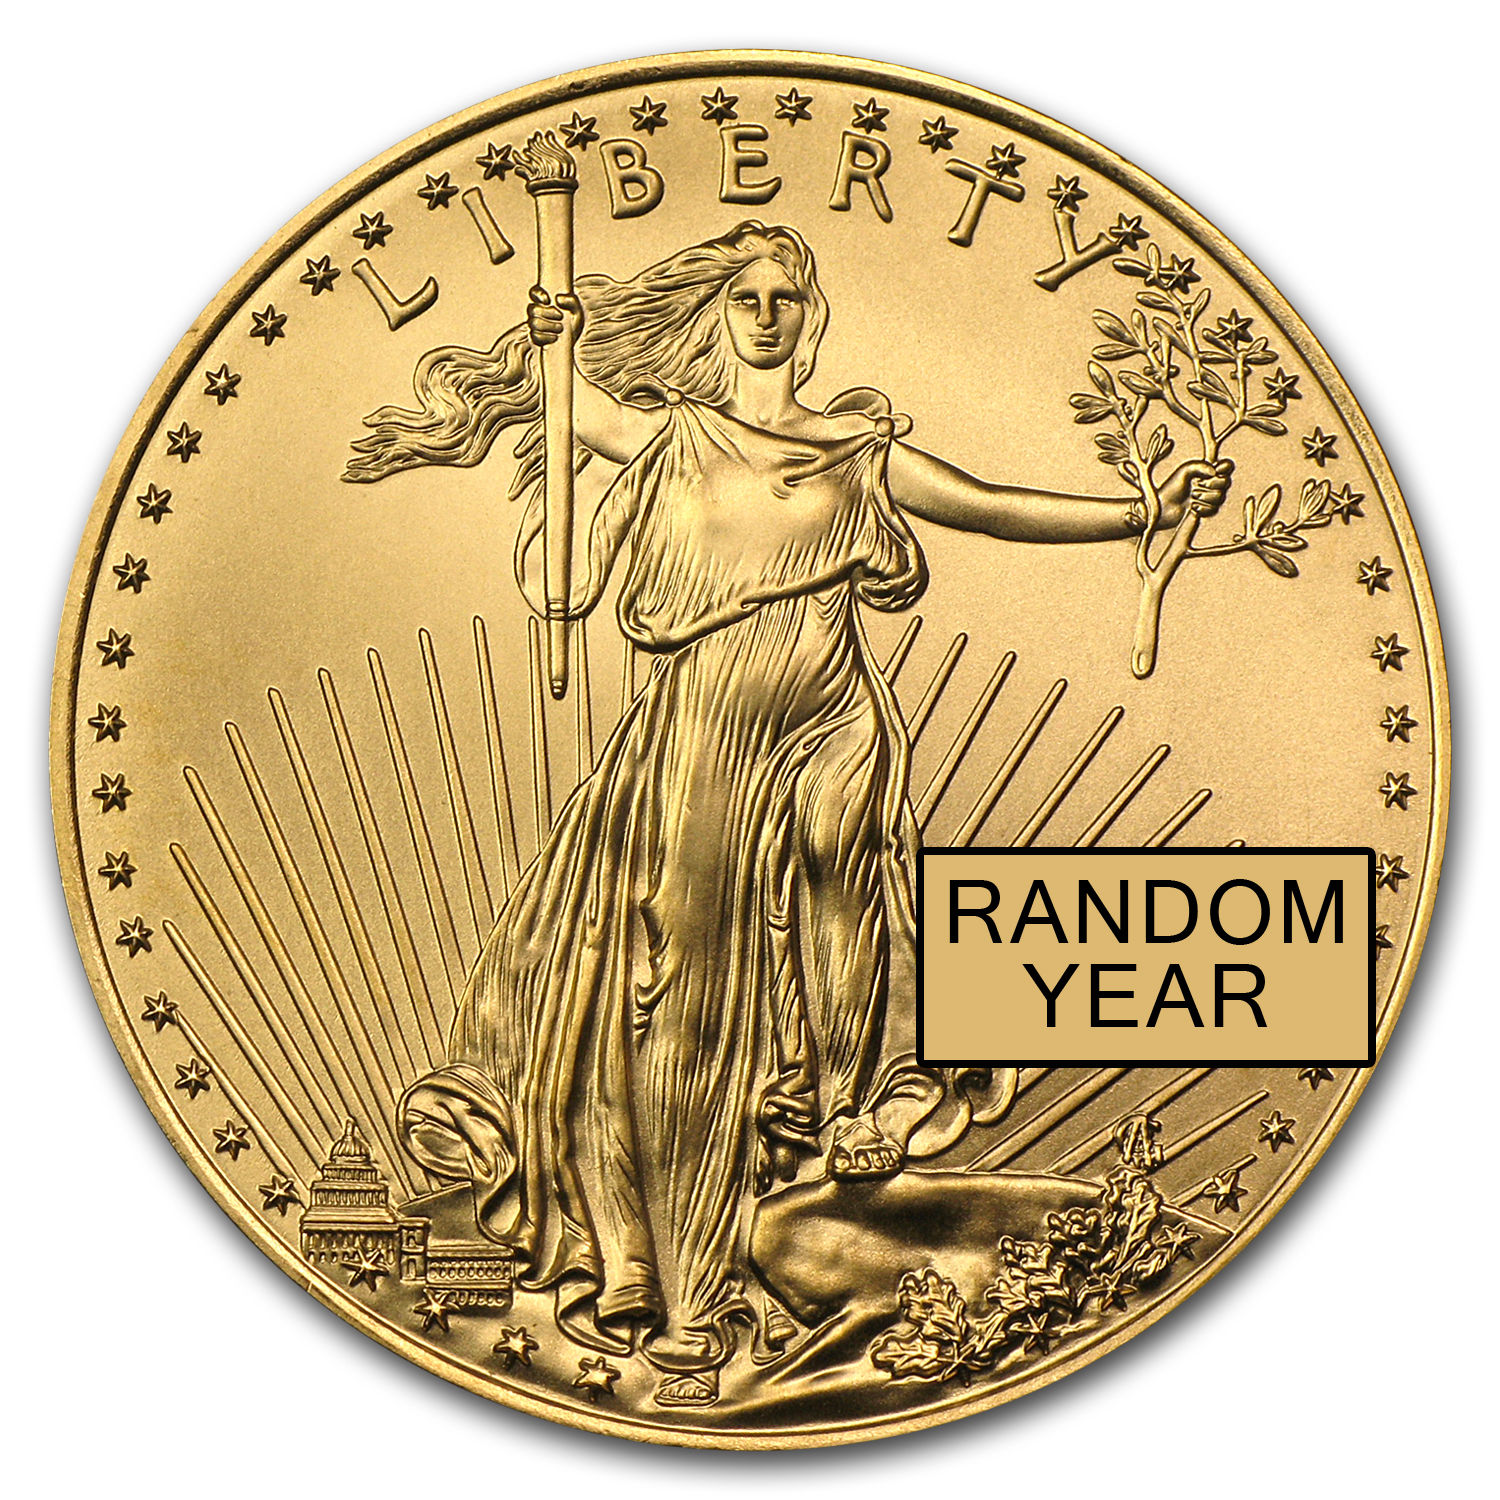 SPECIAL PRICE! 1 oz Gold American Eagle Coin - Random Year - SKU #84672